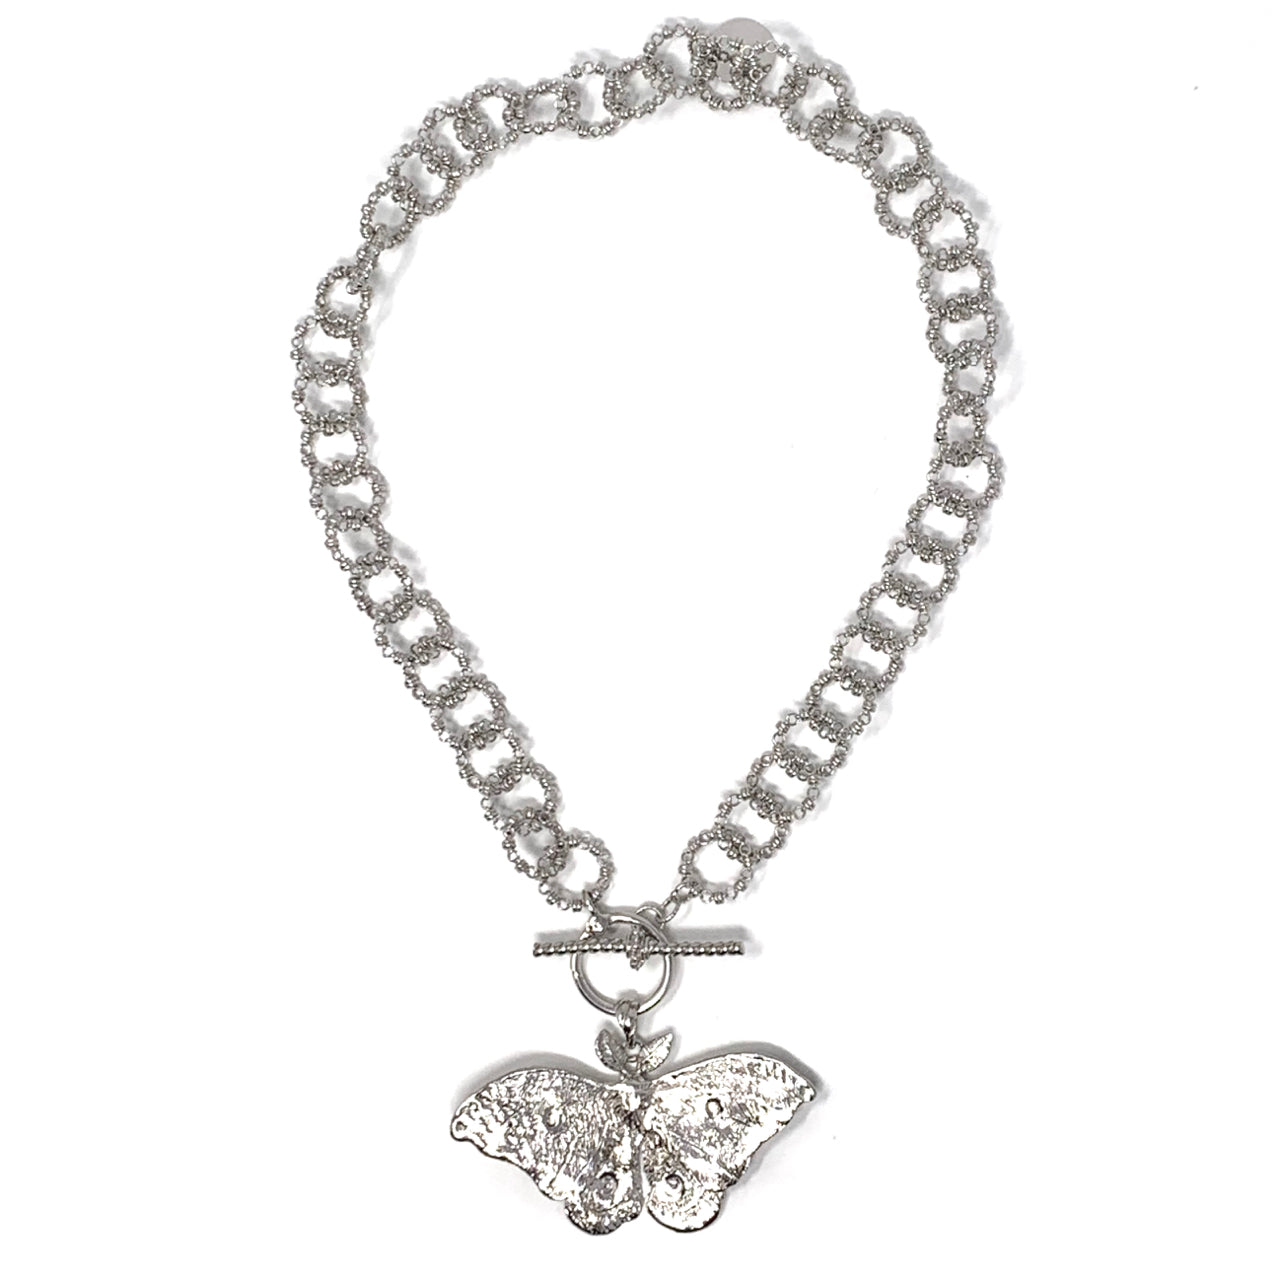 Signorelli Toggle Necklace in Silver